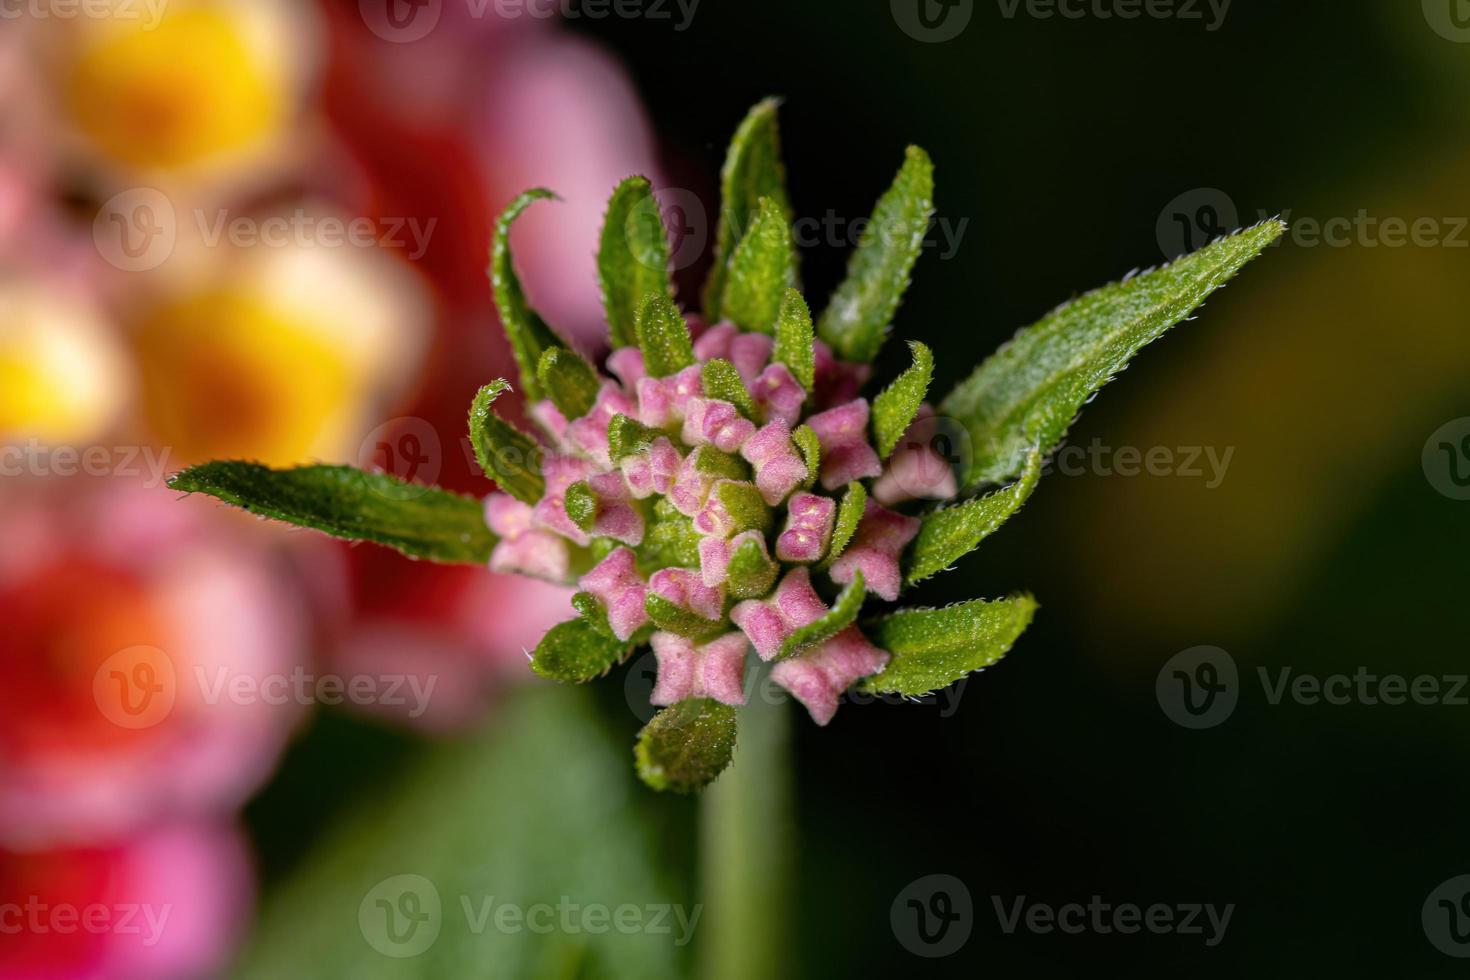 bloem van gewone lantana foto